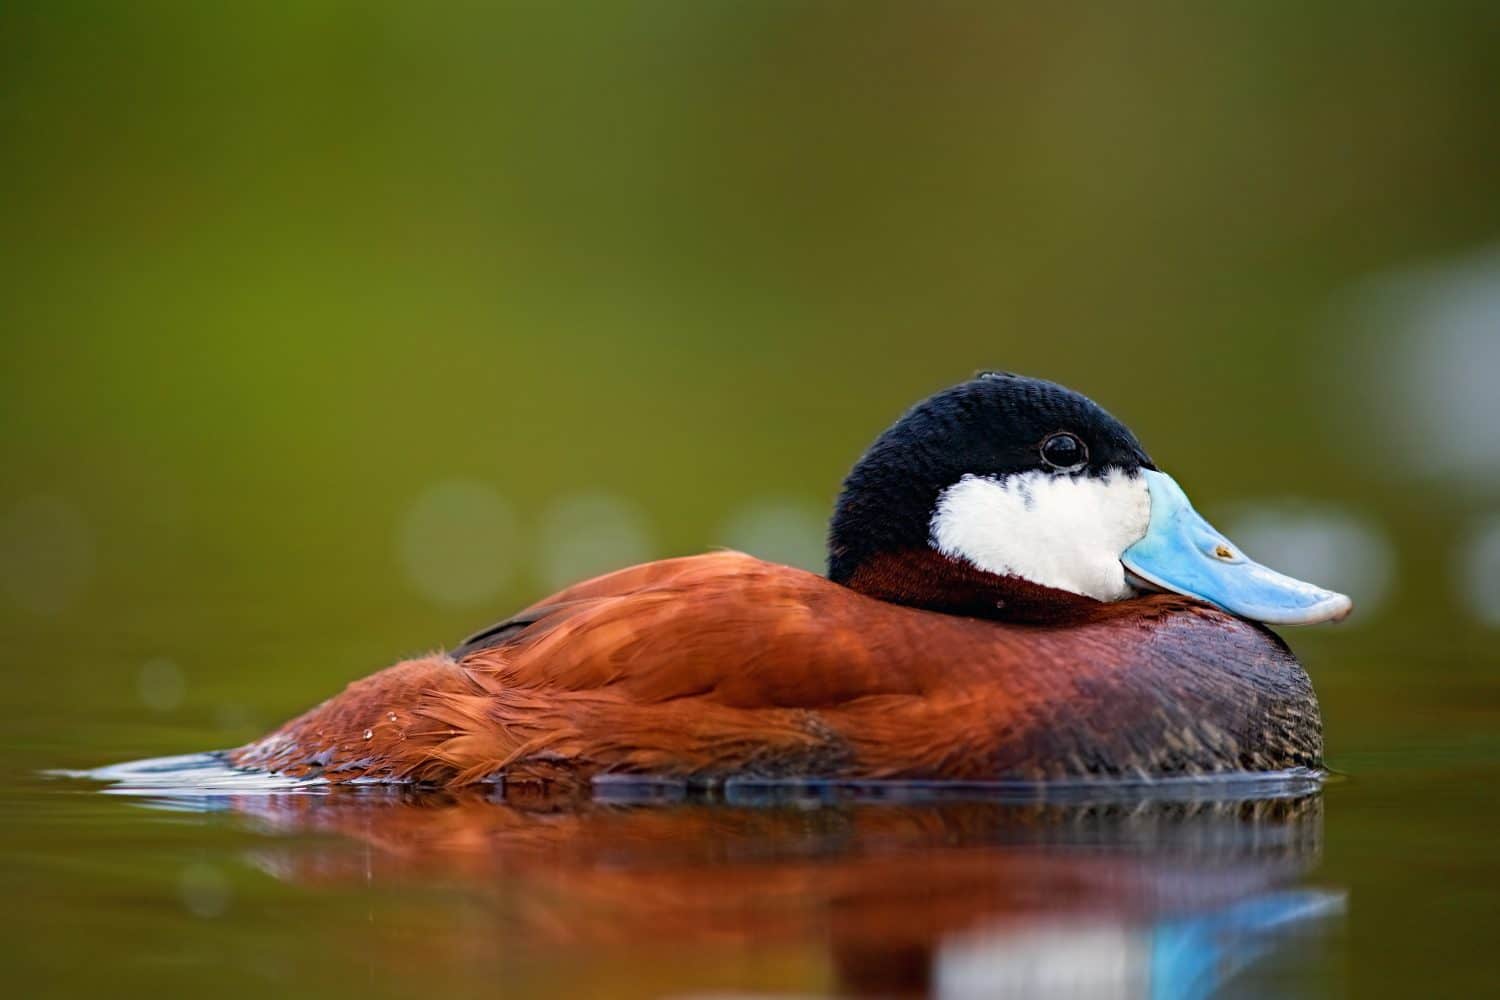 Ruddy duck chilling on the water. (Photo taken in UK, London)